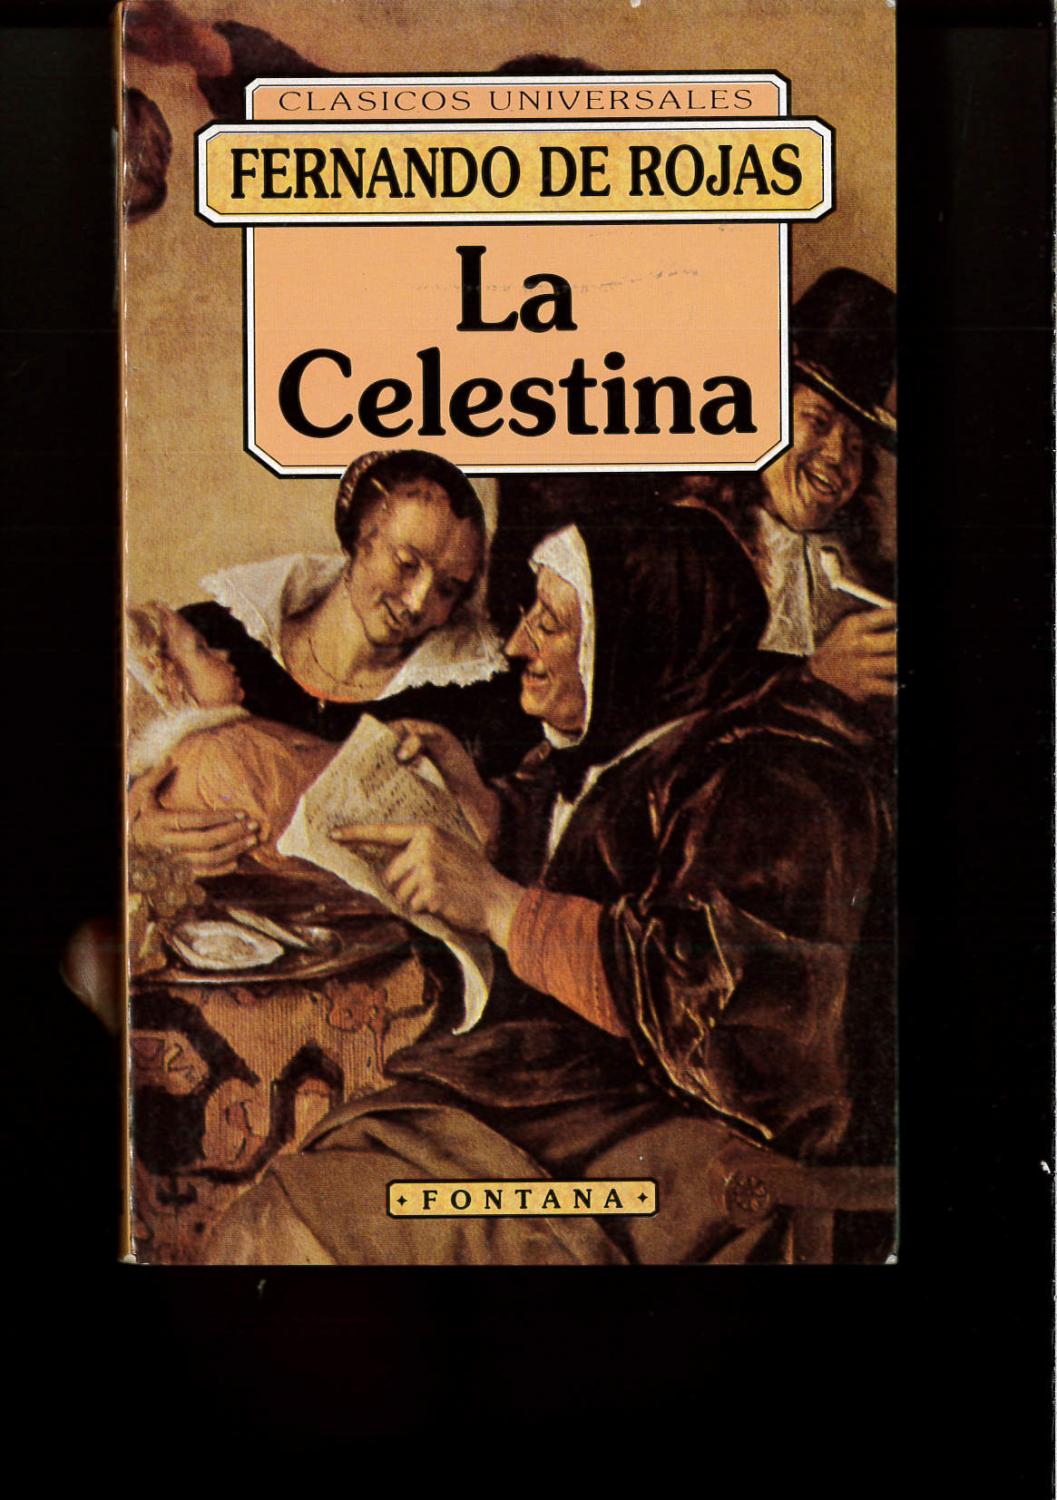 La Celestina - FERNANDO DE ROJAS